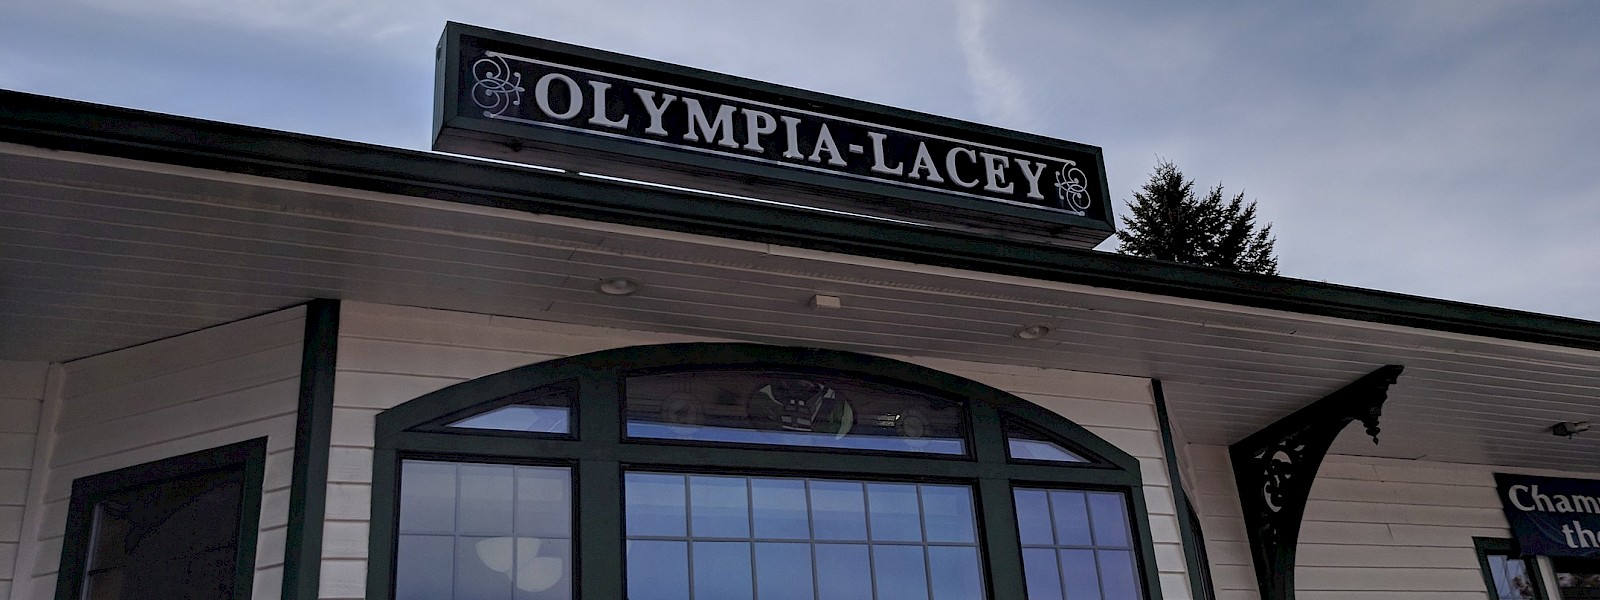 Olympia-Lacey Sta., WA, photo by C. Hamilton